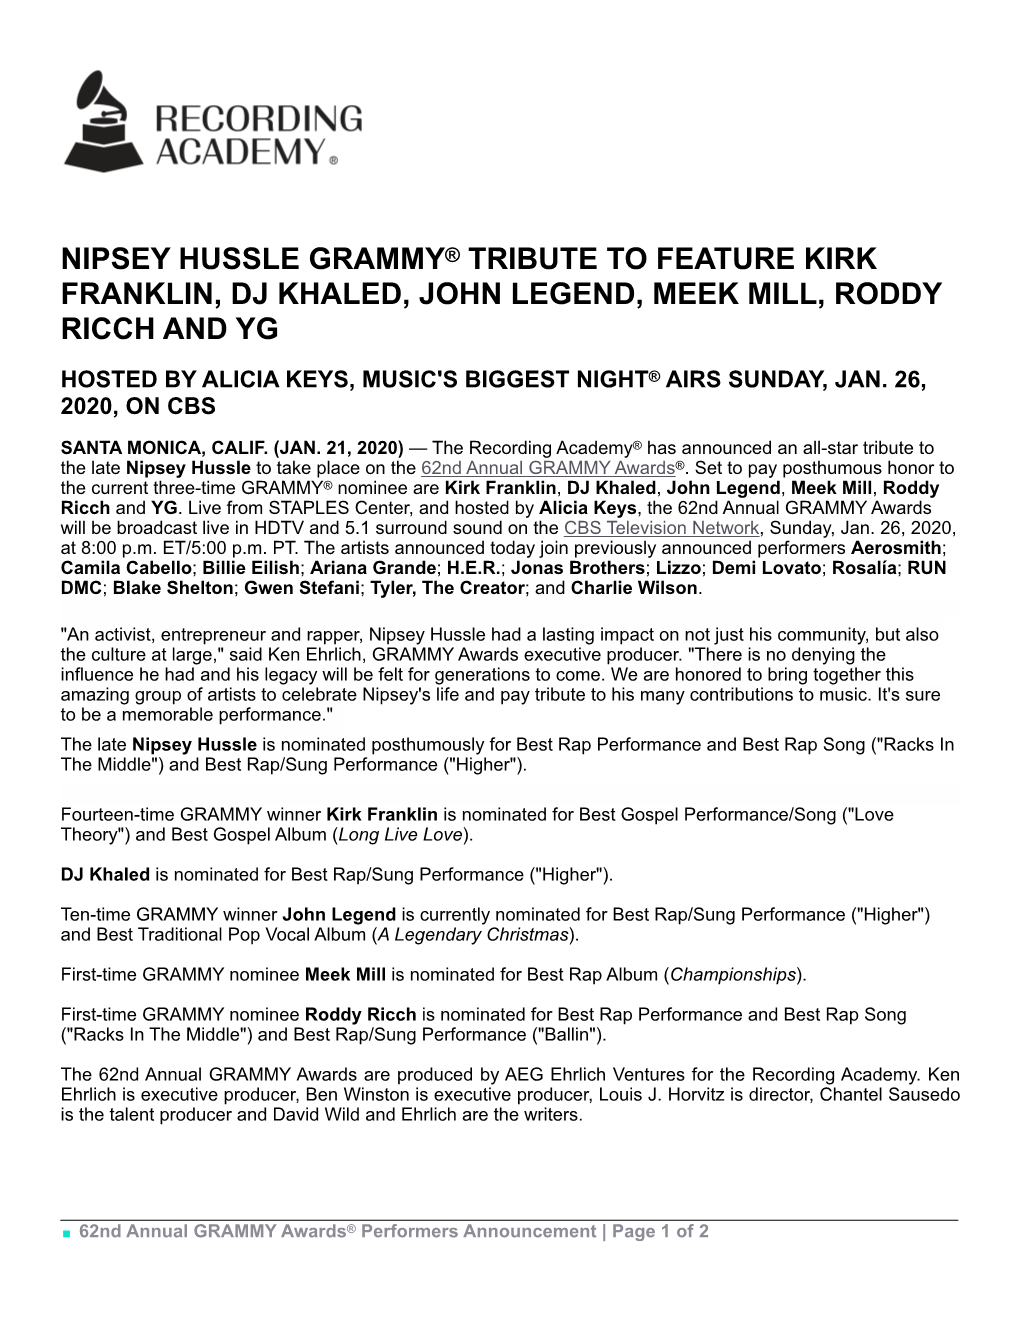 Nipsey Hussle Grammy® Tribute to Feature Kirk Franklin, Dj Khaled, John Legend, Meek Mill, Roddy Ricch and Yg